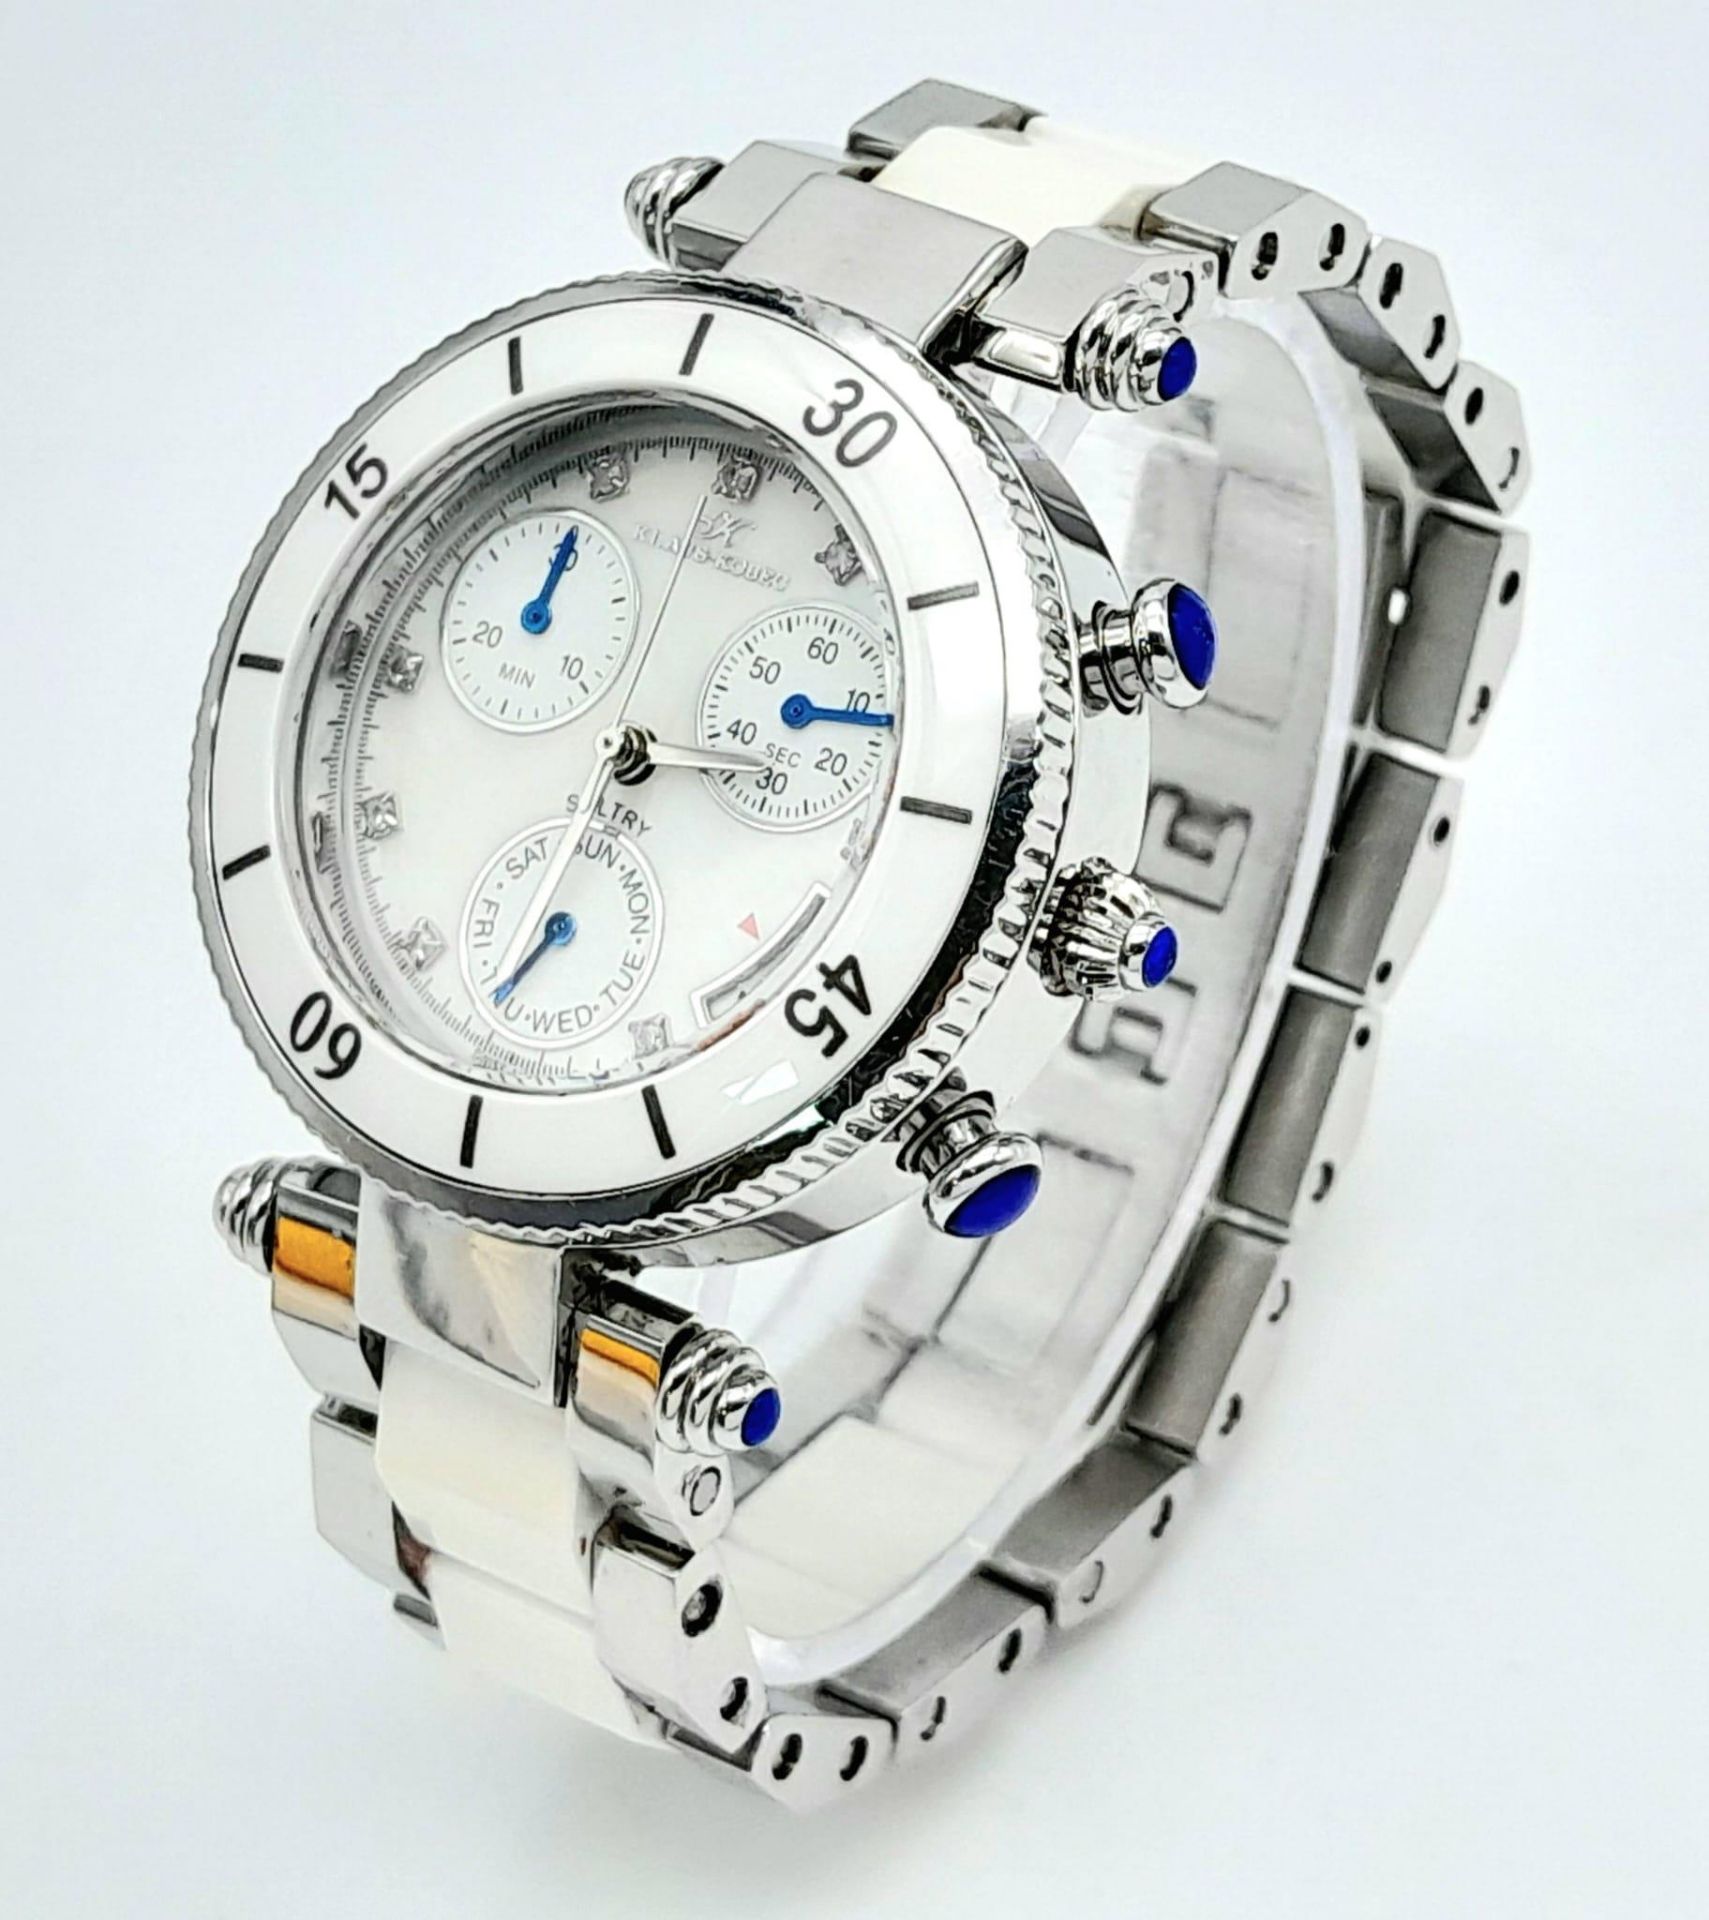 A Klaus Kobec Chronograph Quartz Ladies Watch. Ceramic and stainless steel bracelet and case - 34mm.